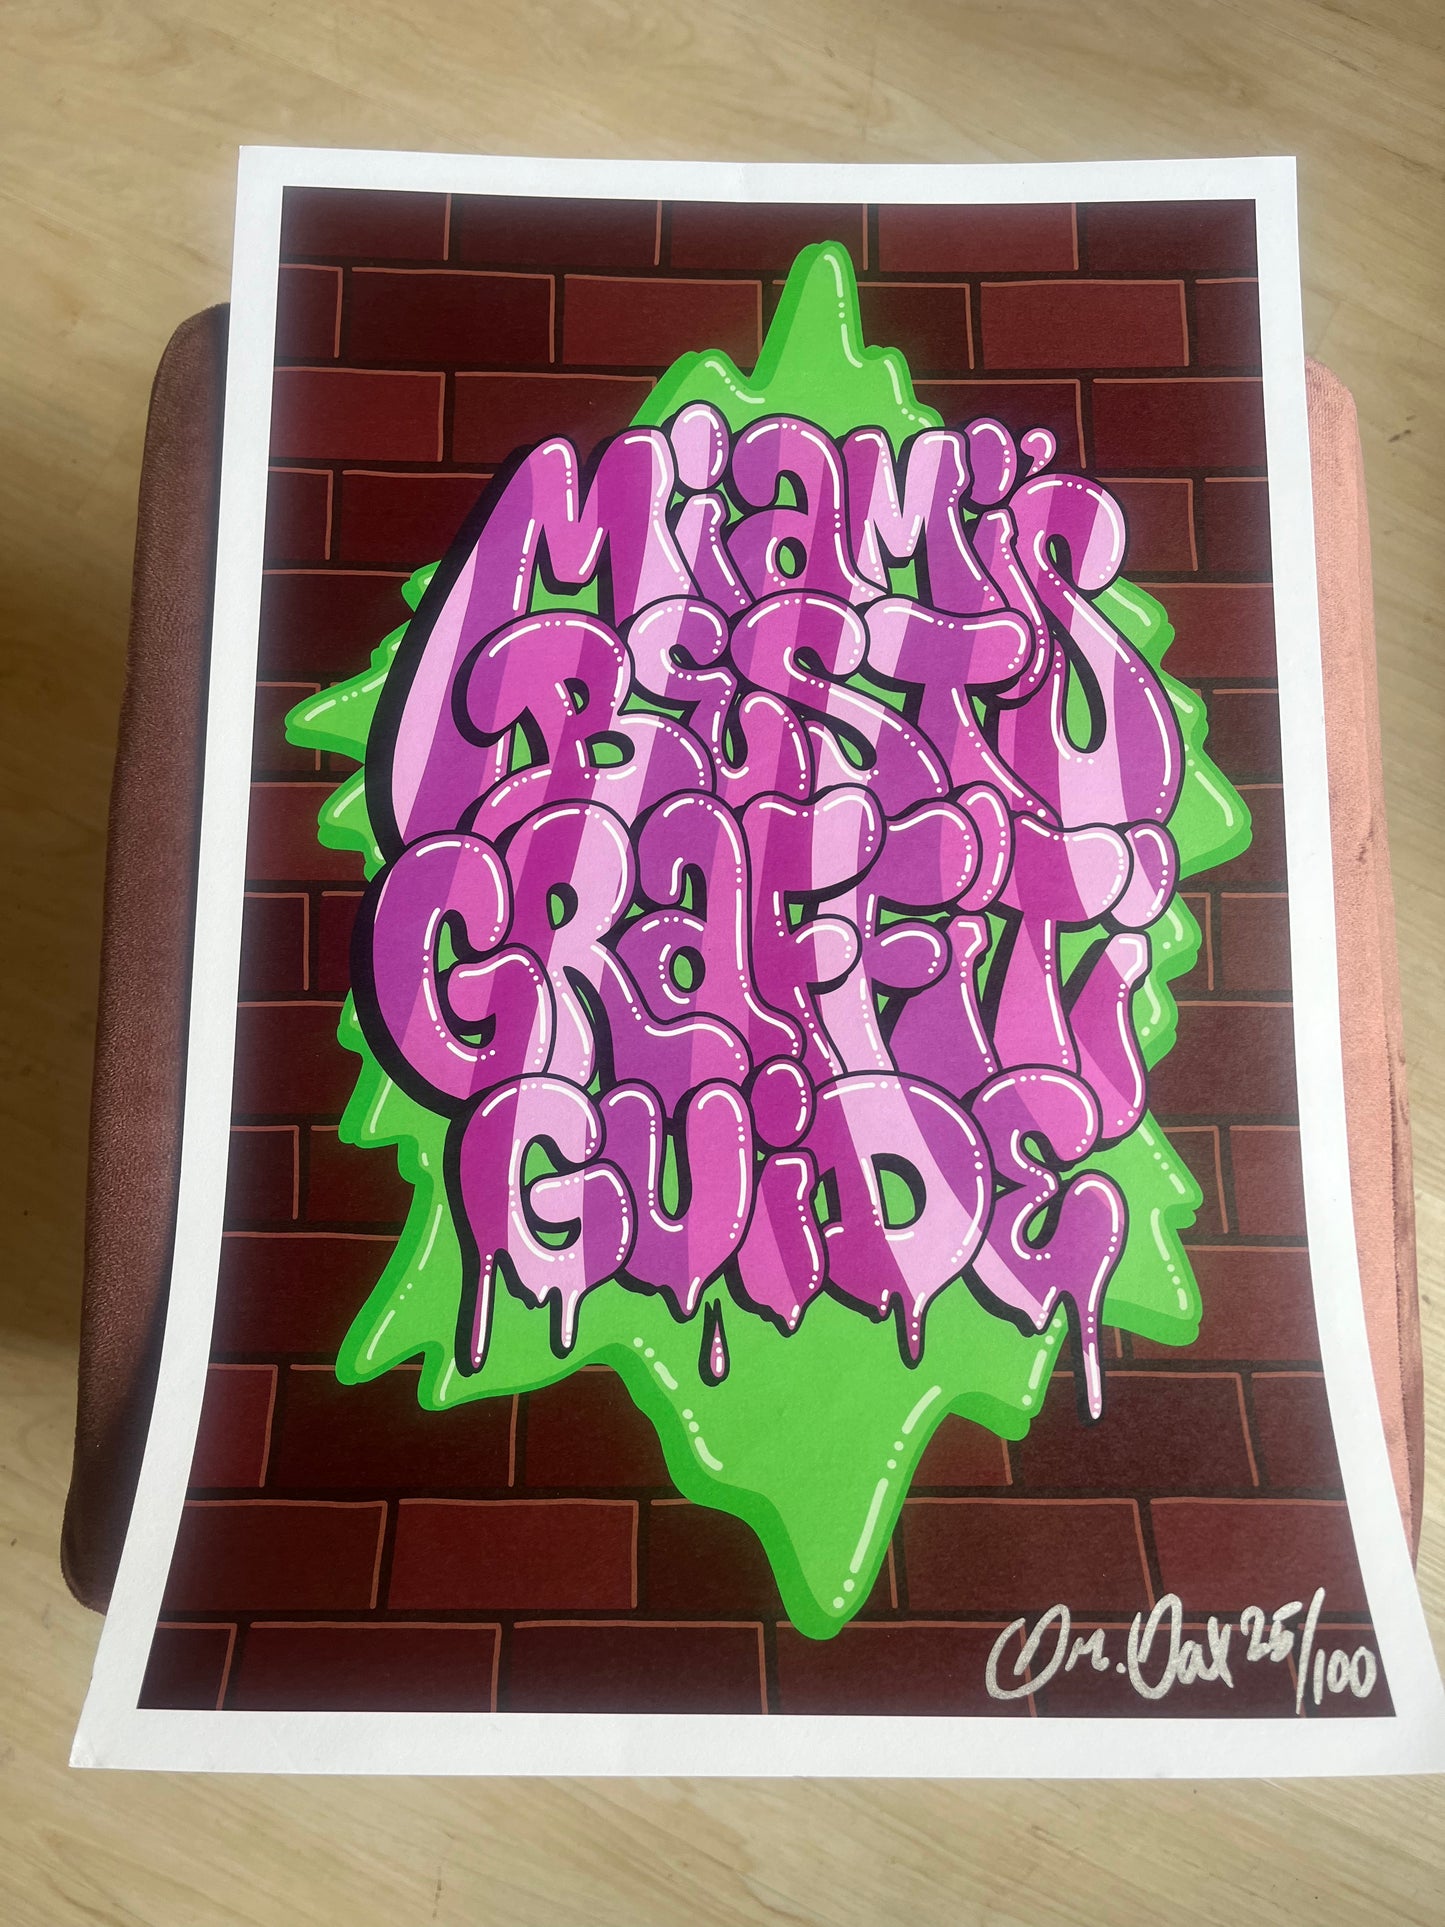 "Miami's Best Graffiti Guide" - 13 x 17" inches. Print - by Dr. Daks - 2020